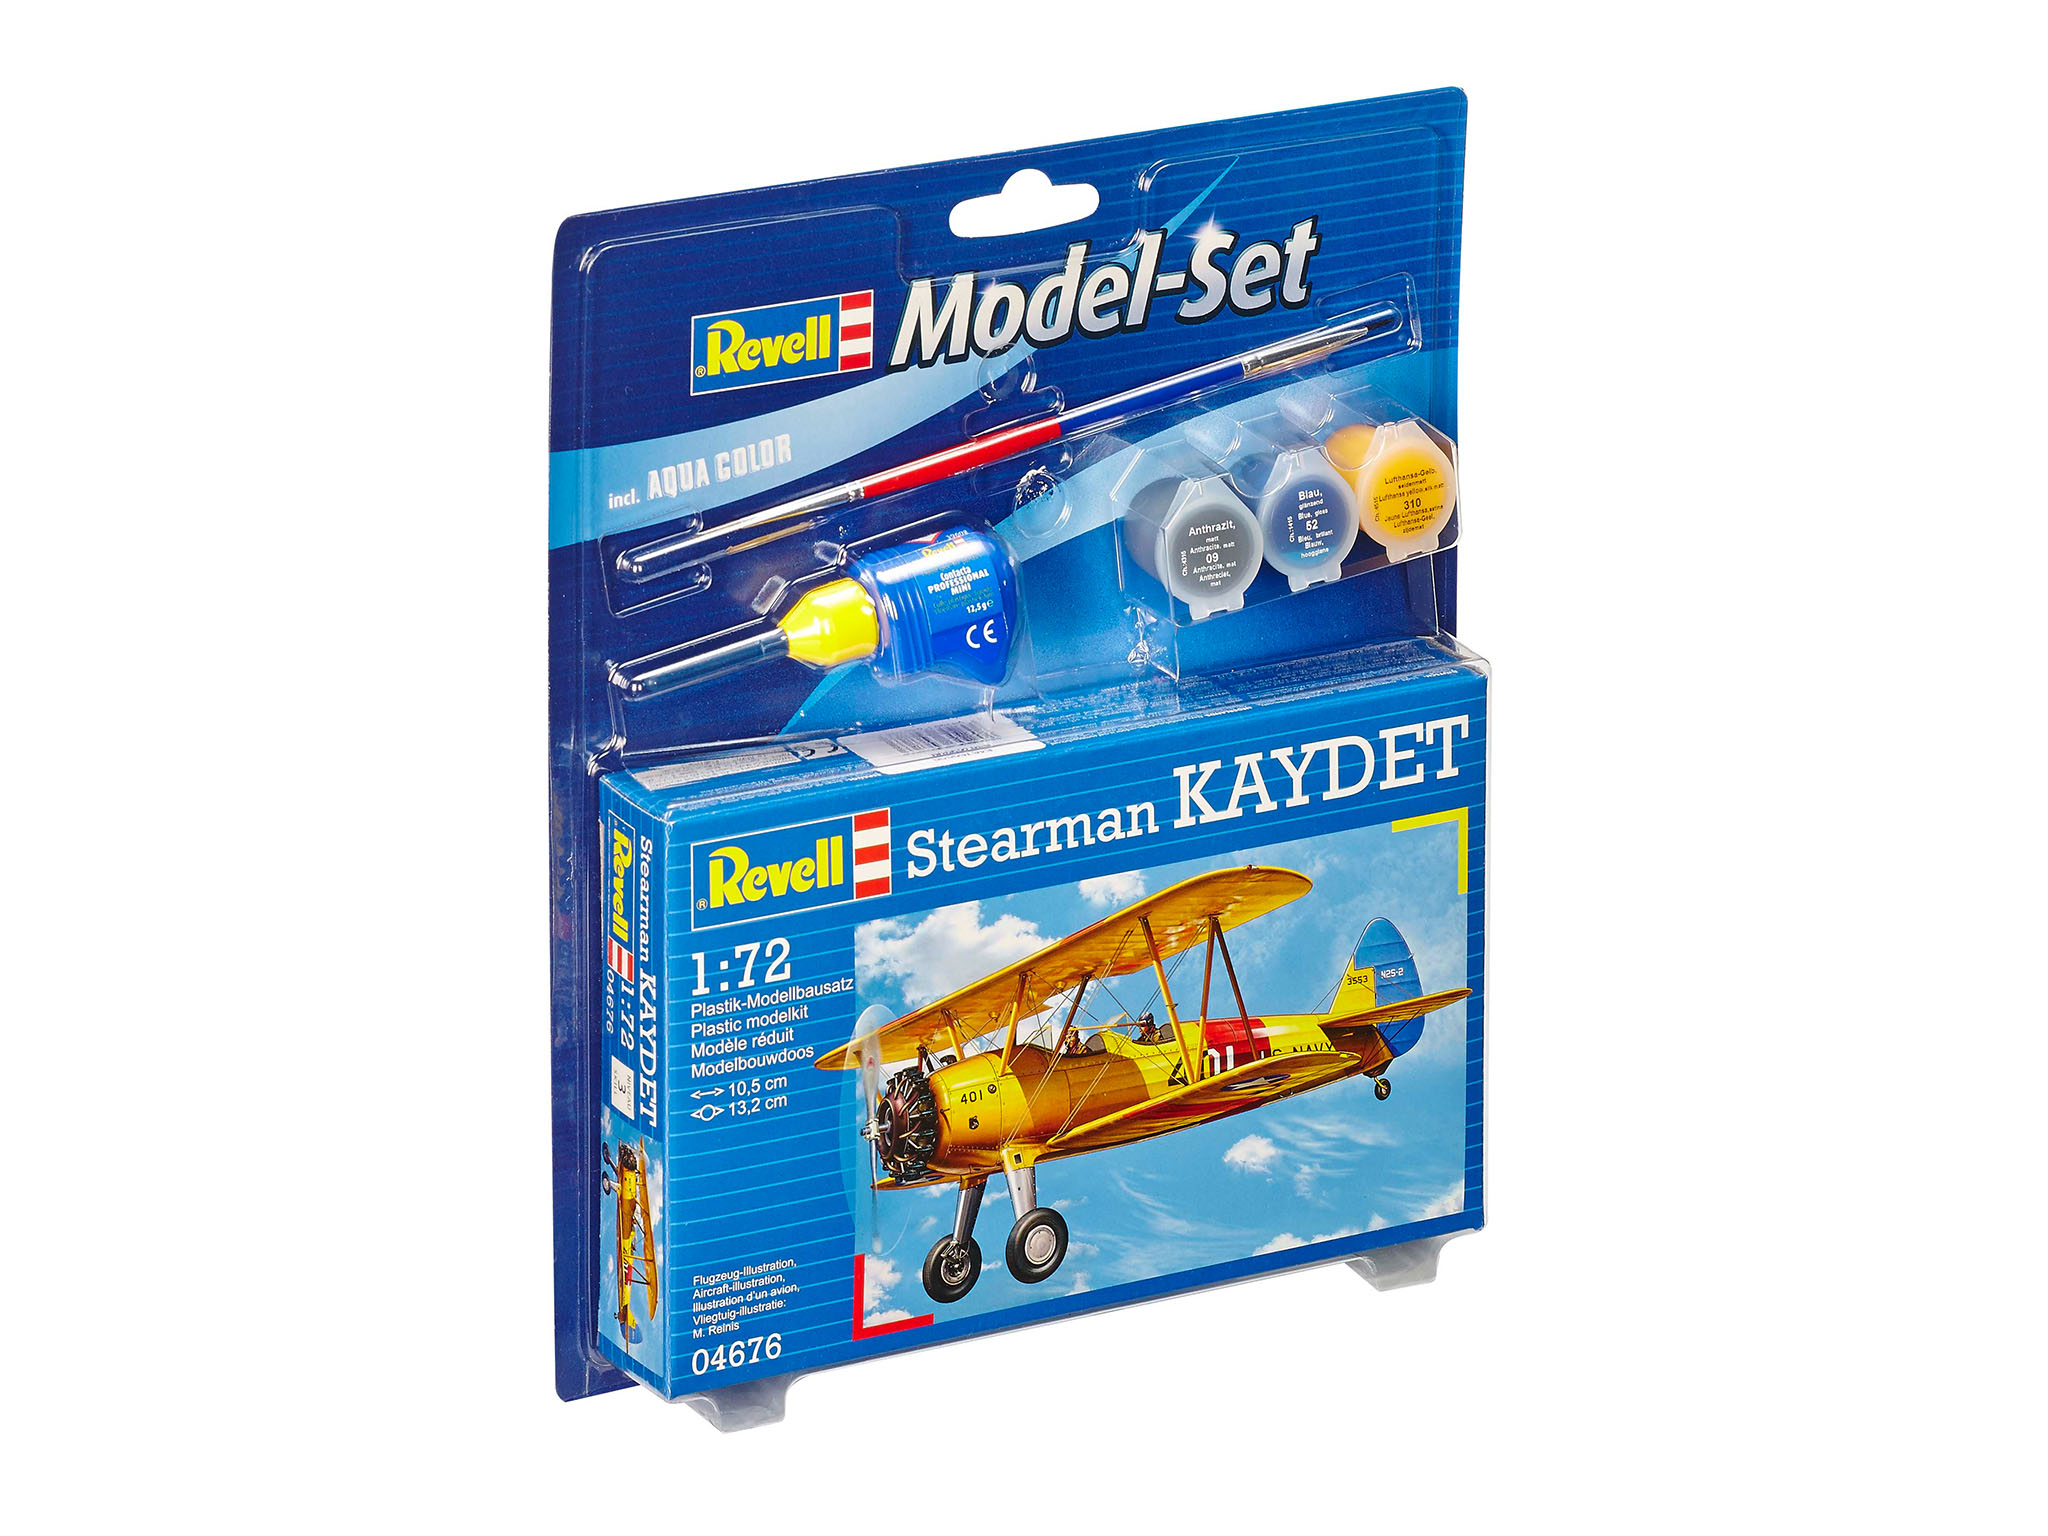 REVELL 64676 MODEL SET Modellbausatz, KAYDET STEARMAN Mehrfarbig